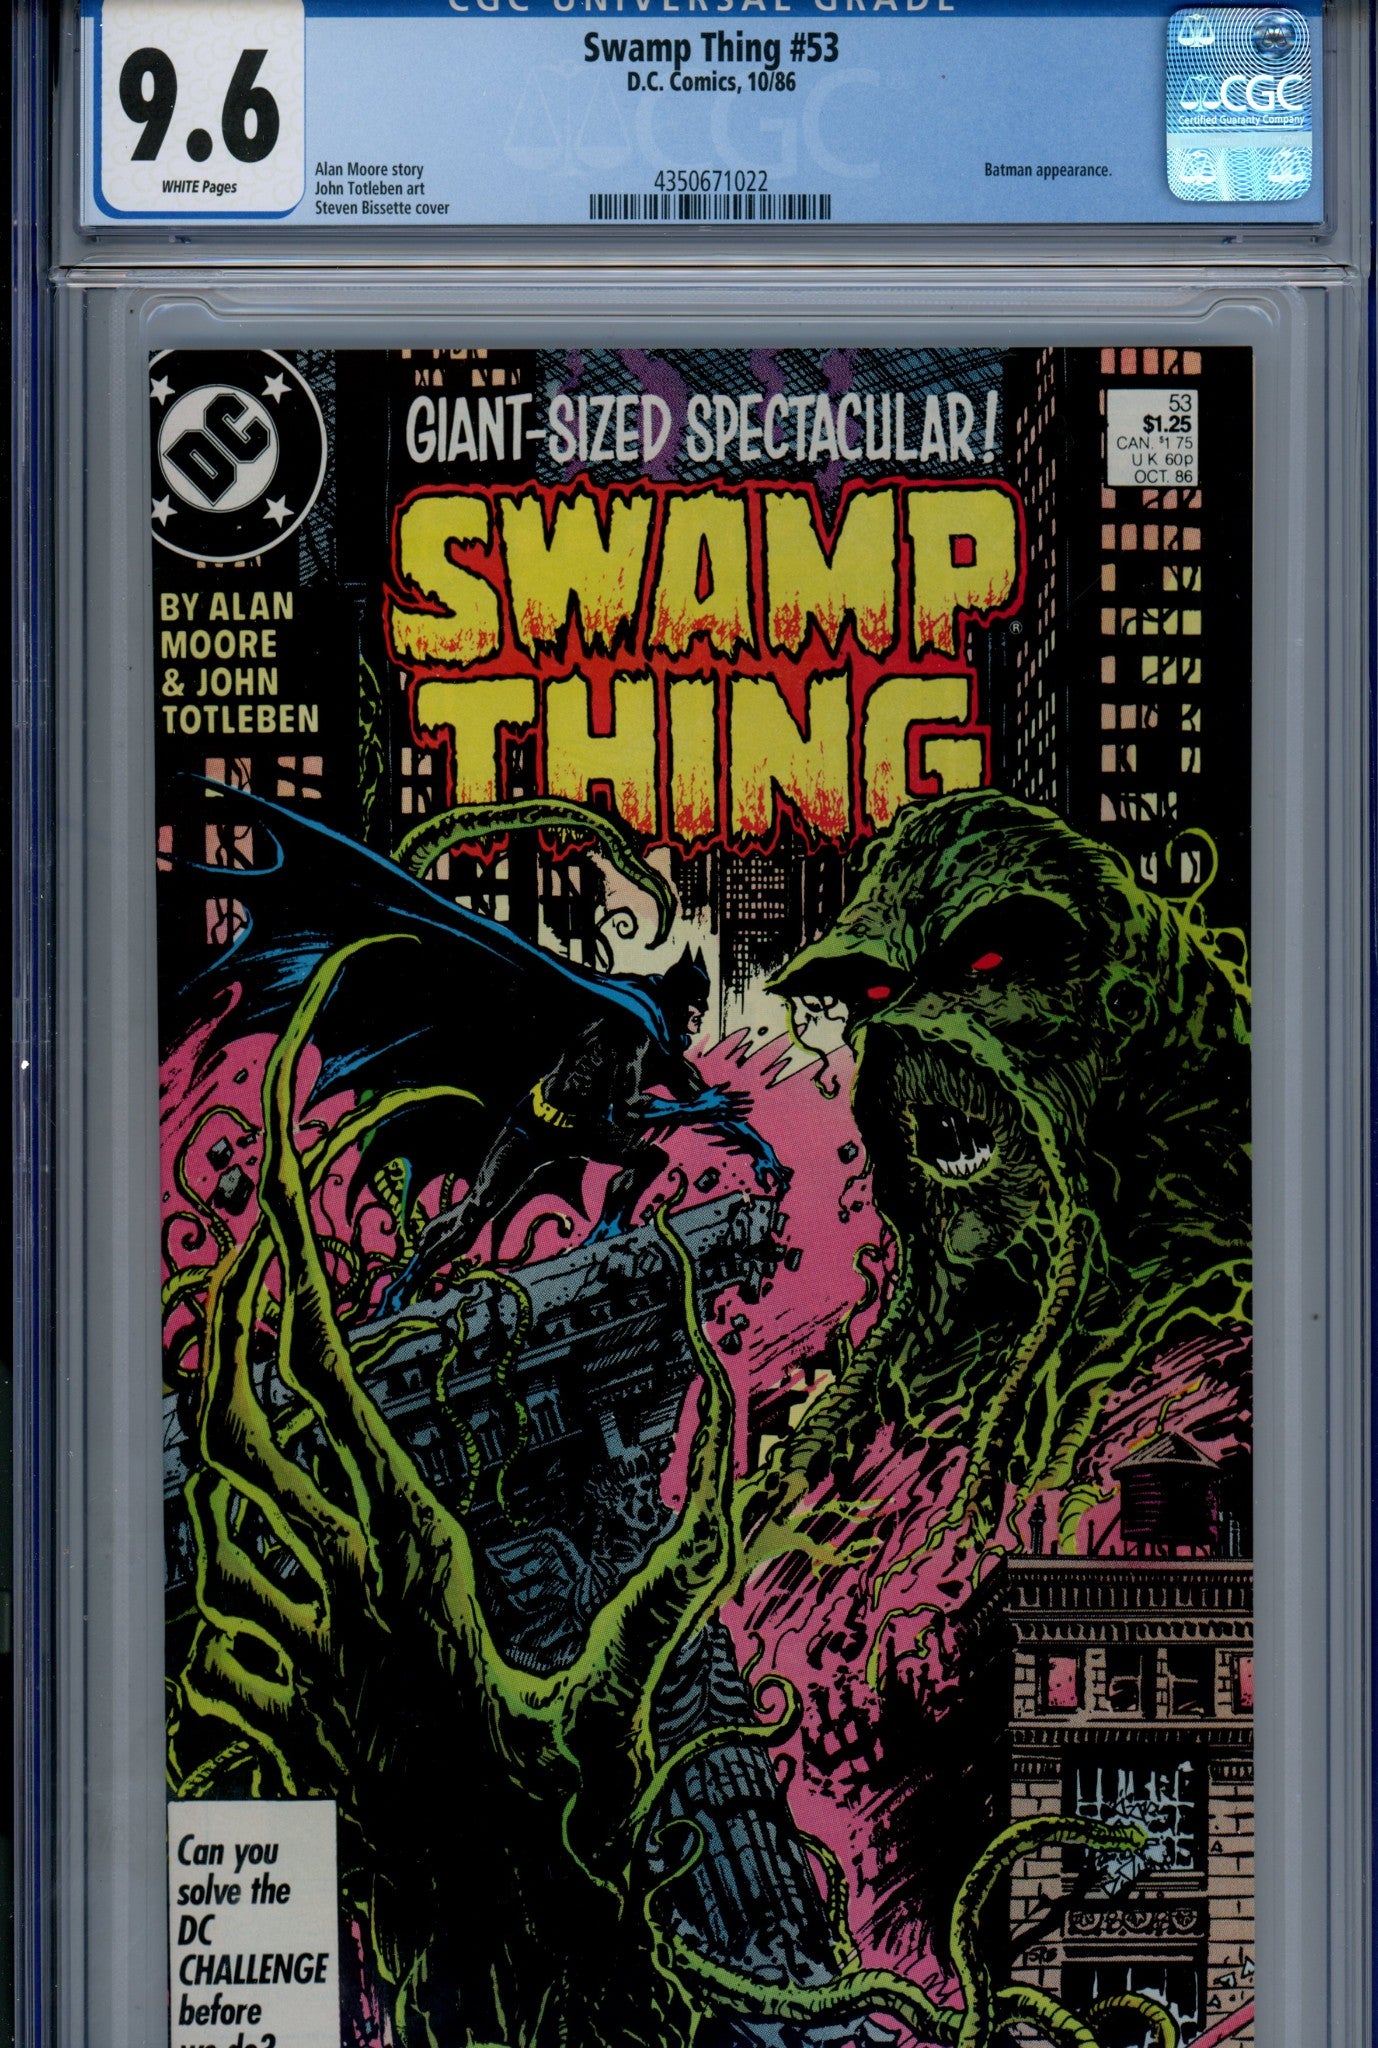 Swamp Thing Vol 2 53 CGC 9.6 (NM+) (1986) 